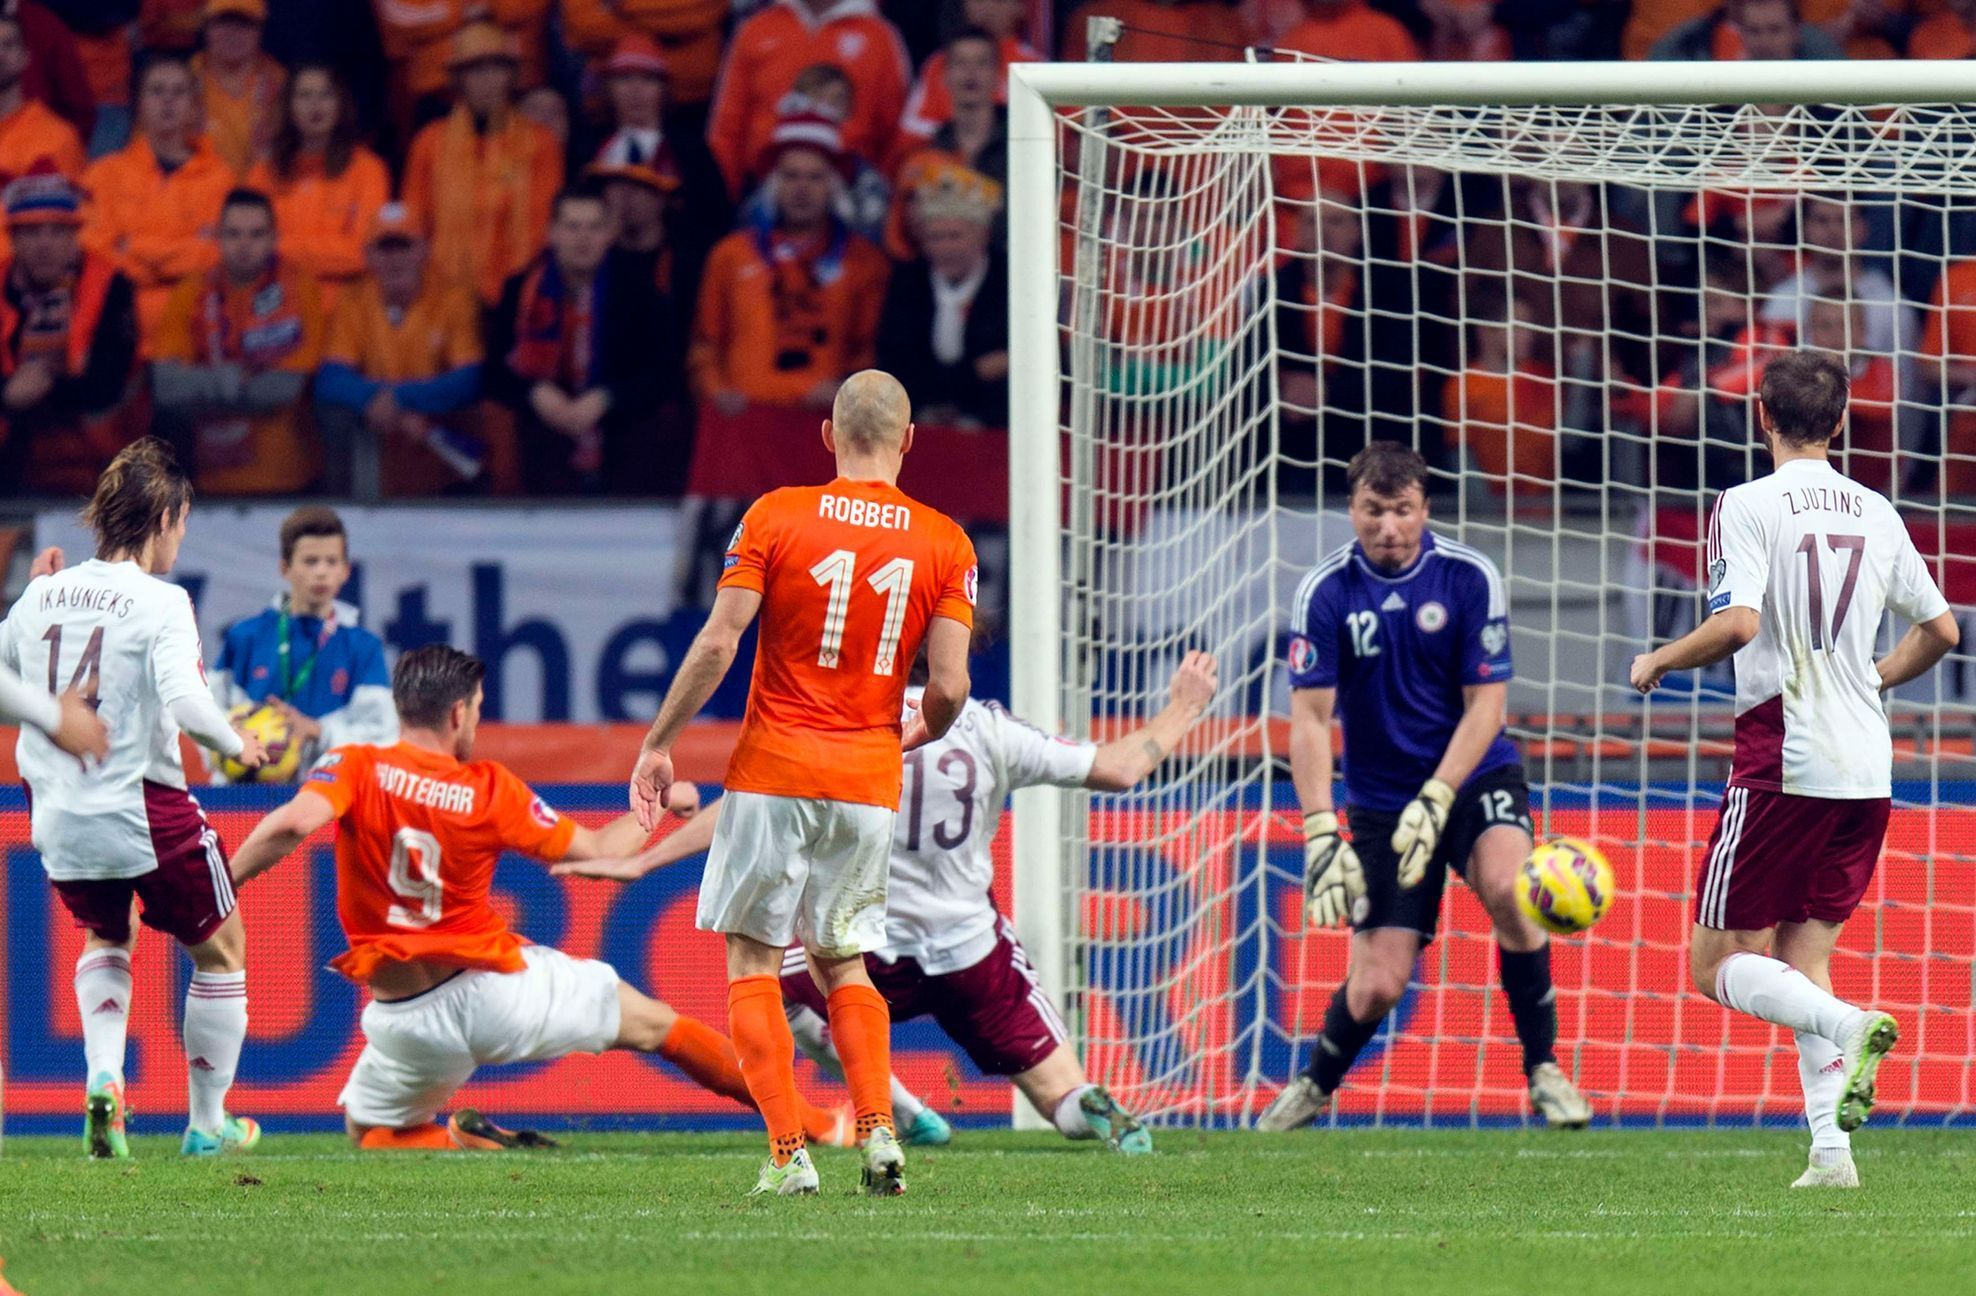 Nizozemsko-Lotyšsko: Klaas-Jan Huntelaar (9) dává gól